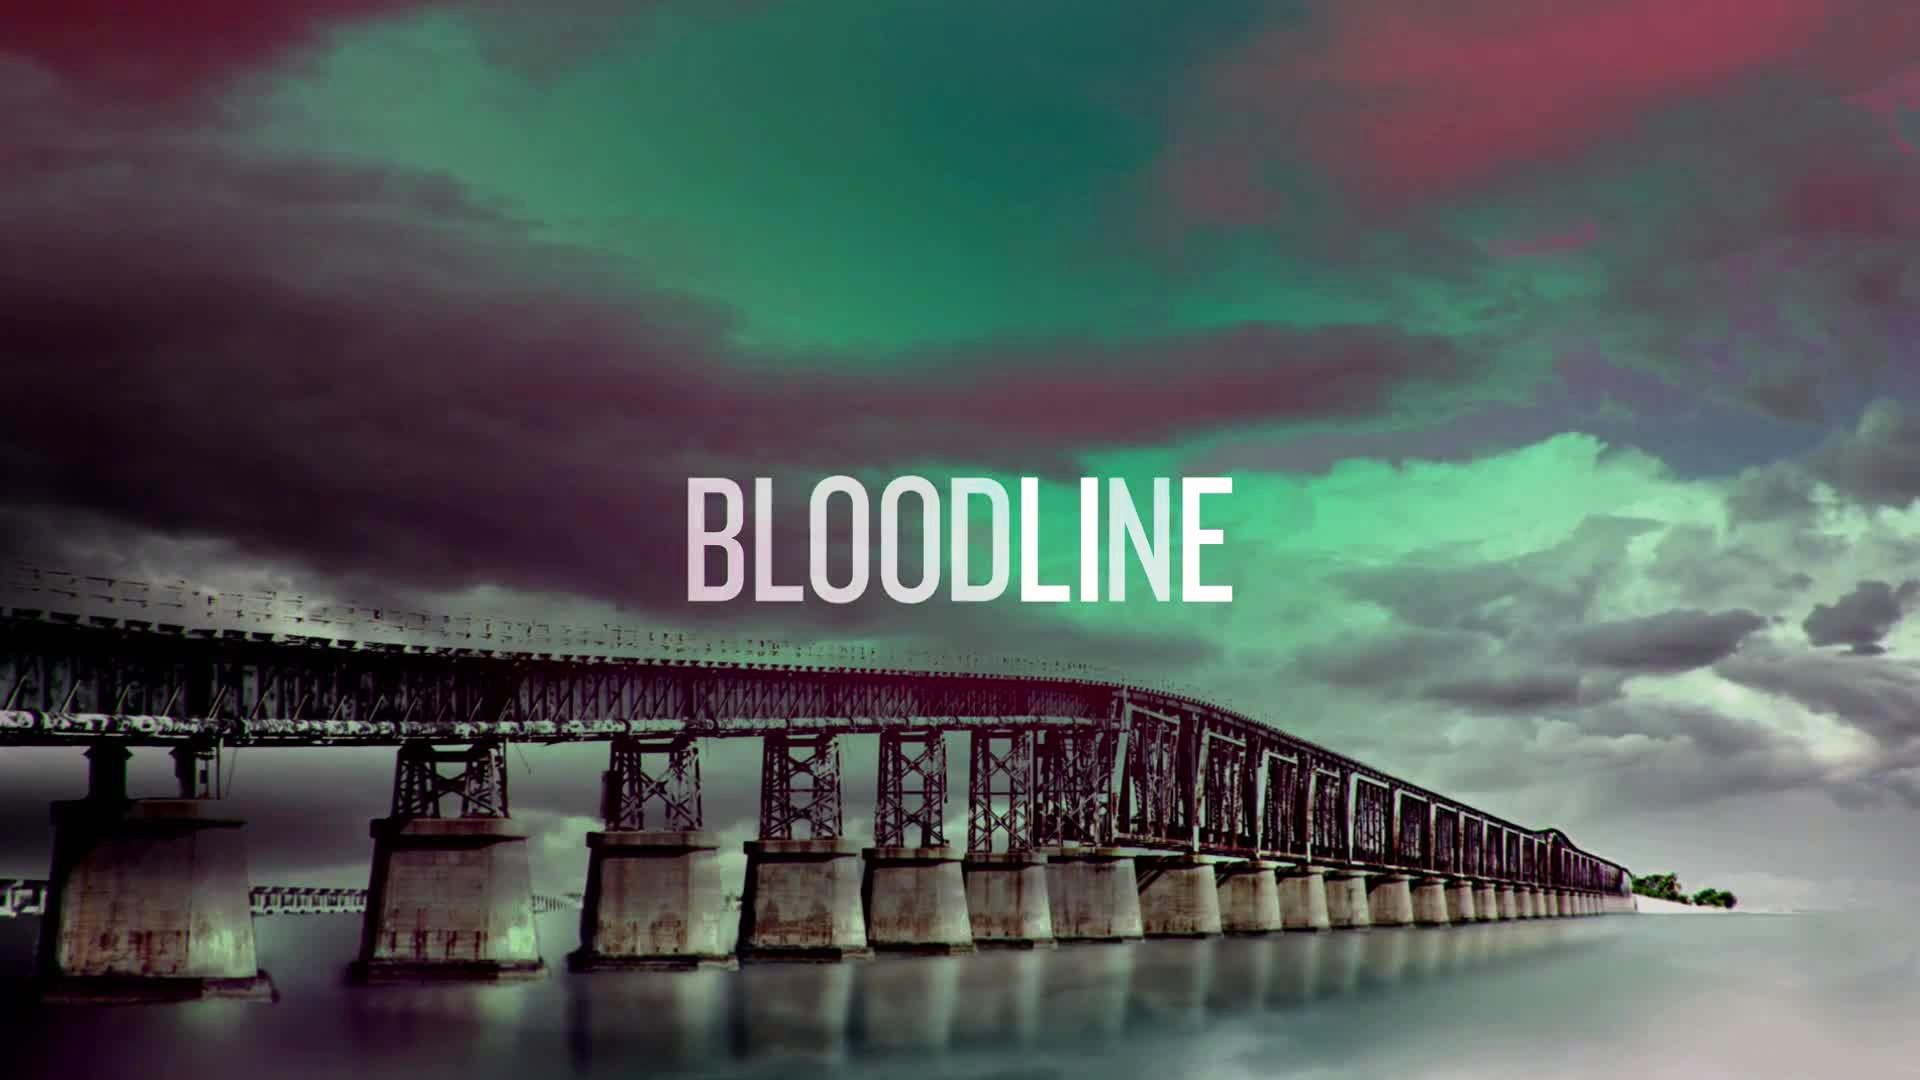 Bloodline (2015)dvdplanetstorepk